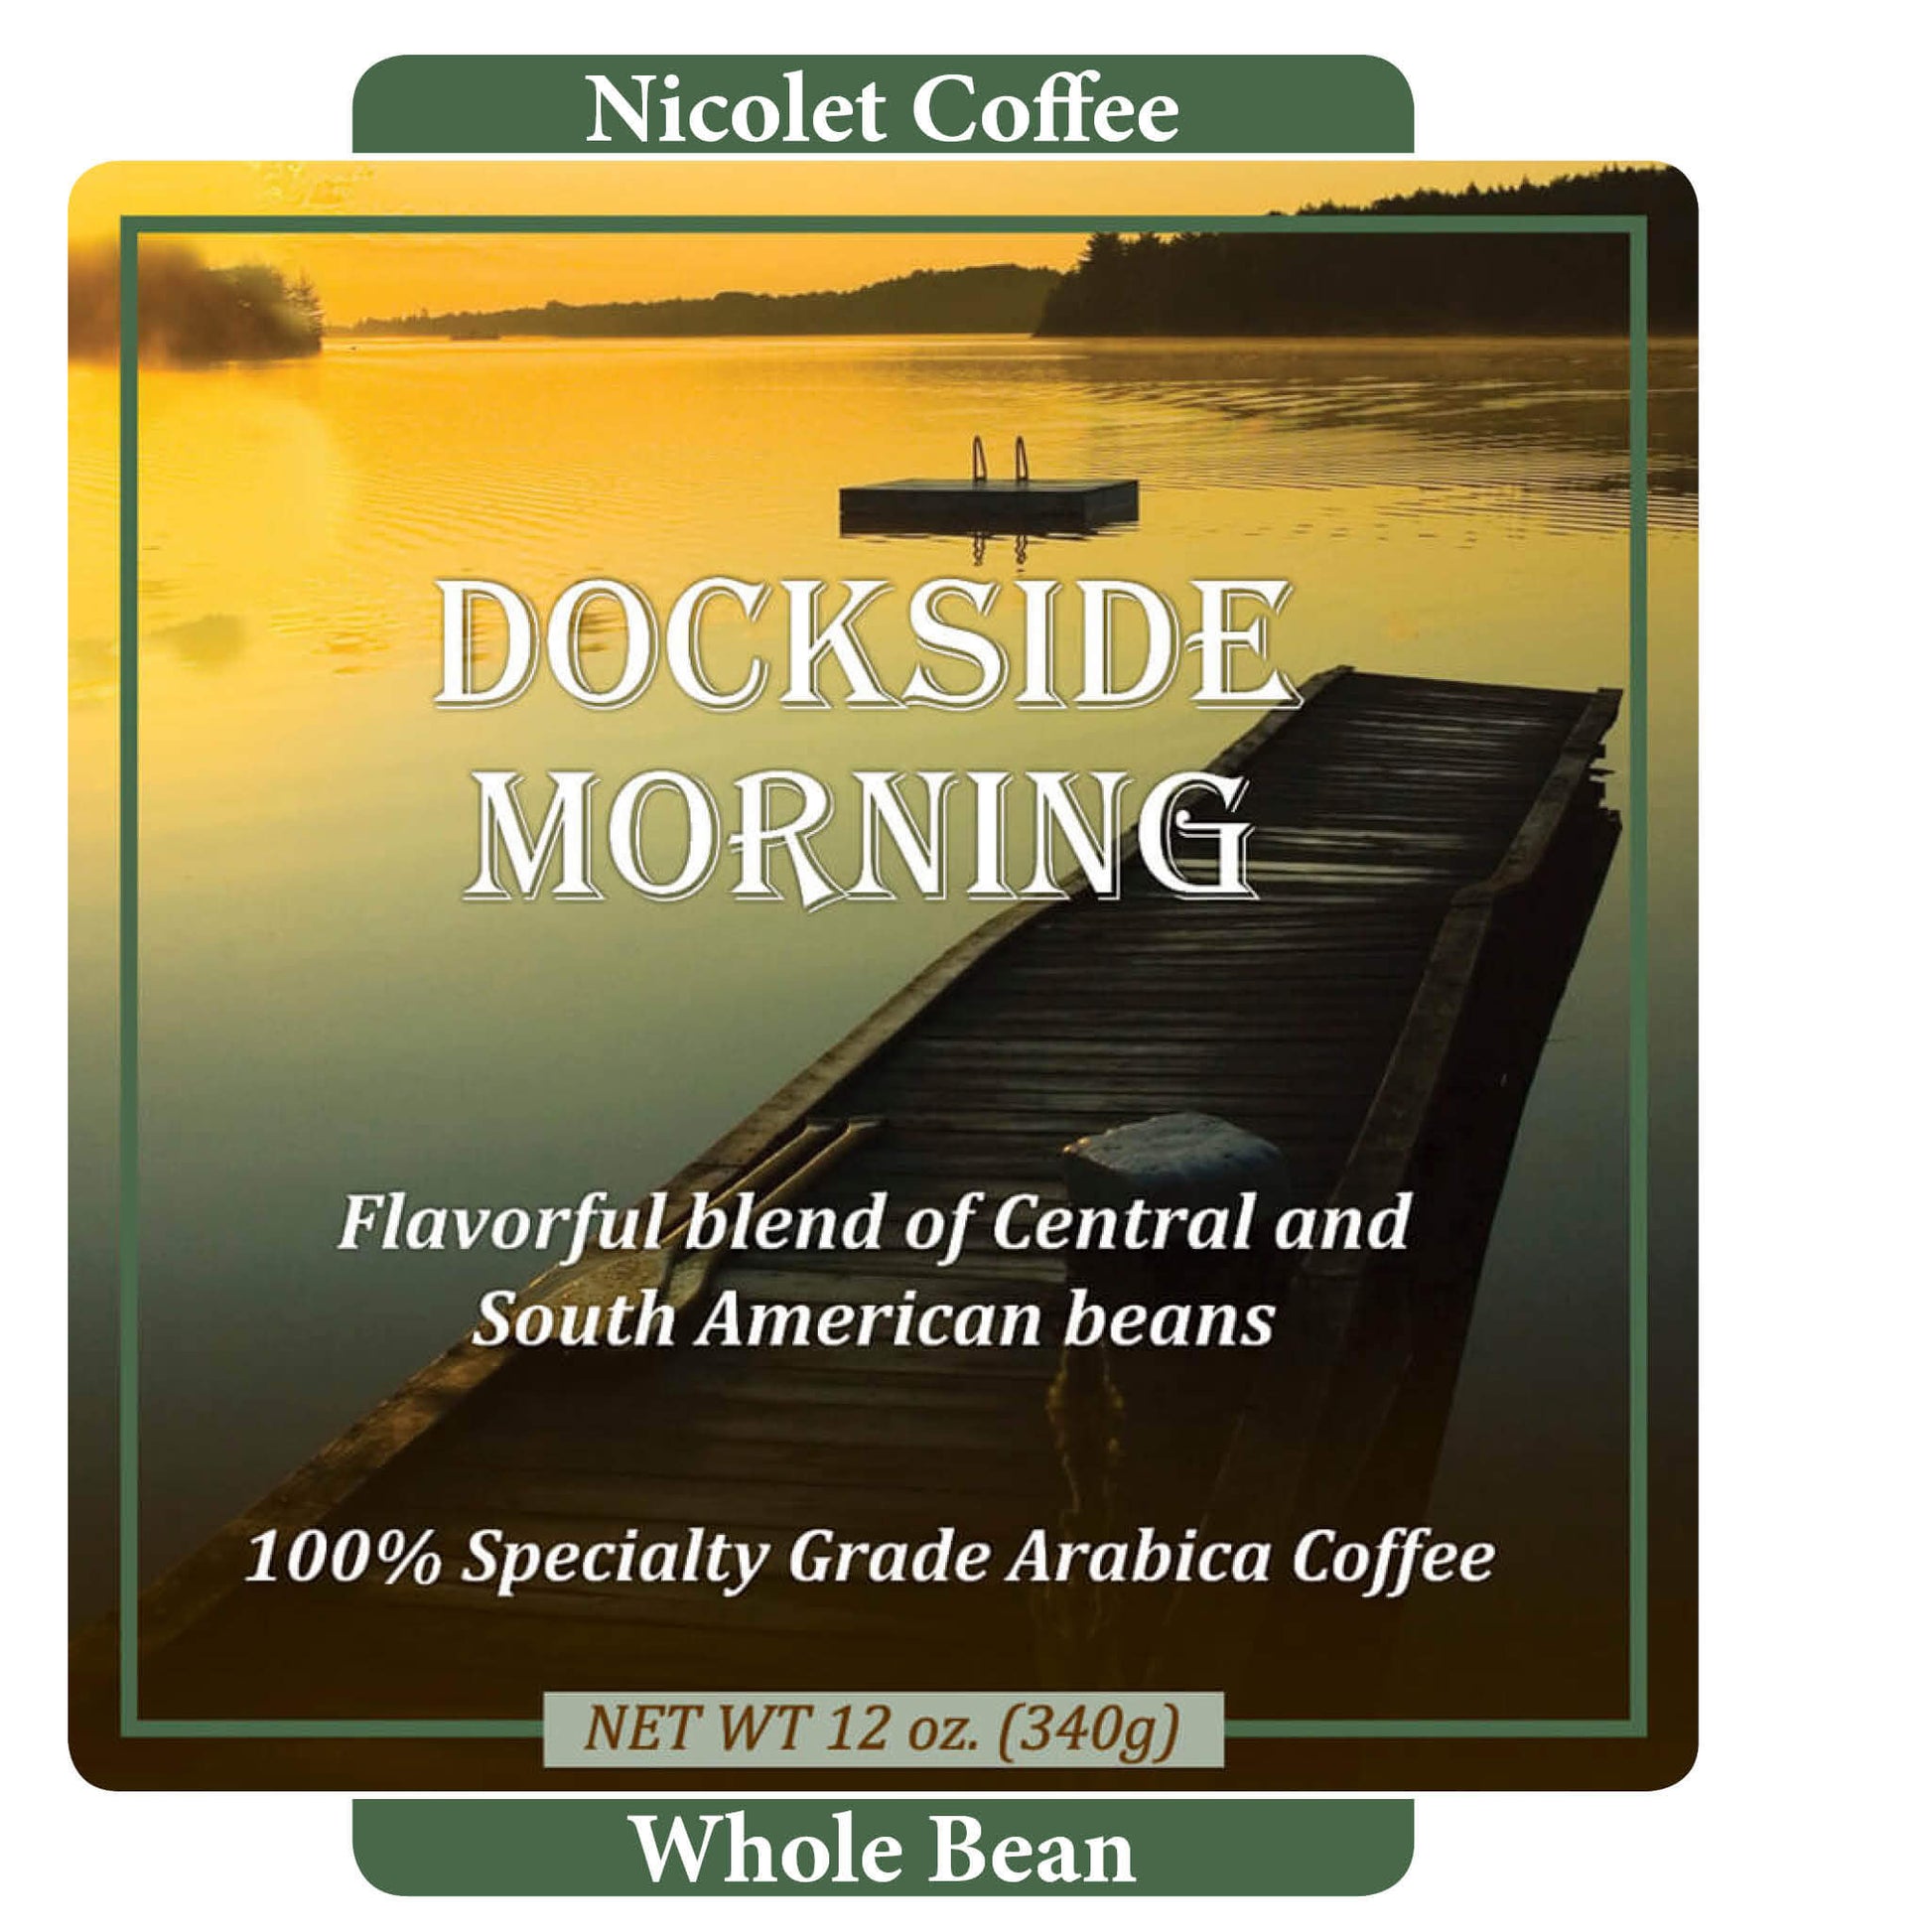 Dockside Morning - Whole Bean